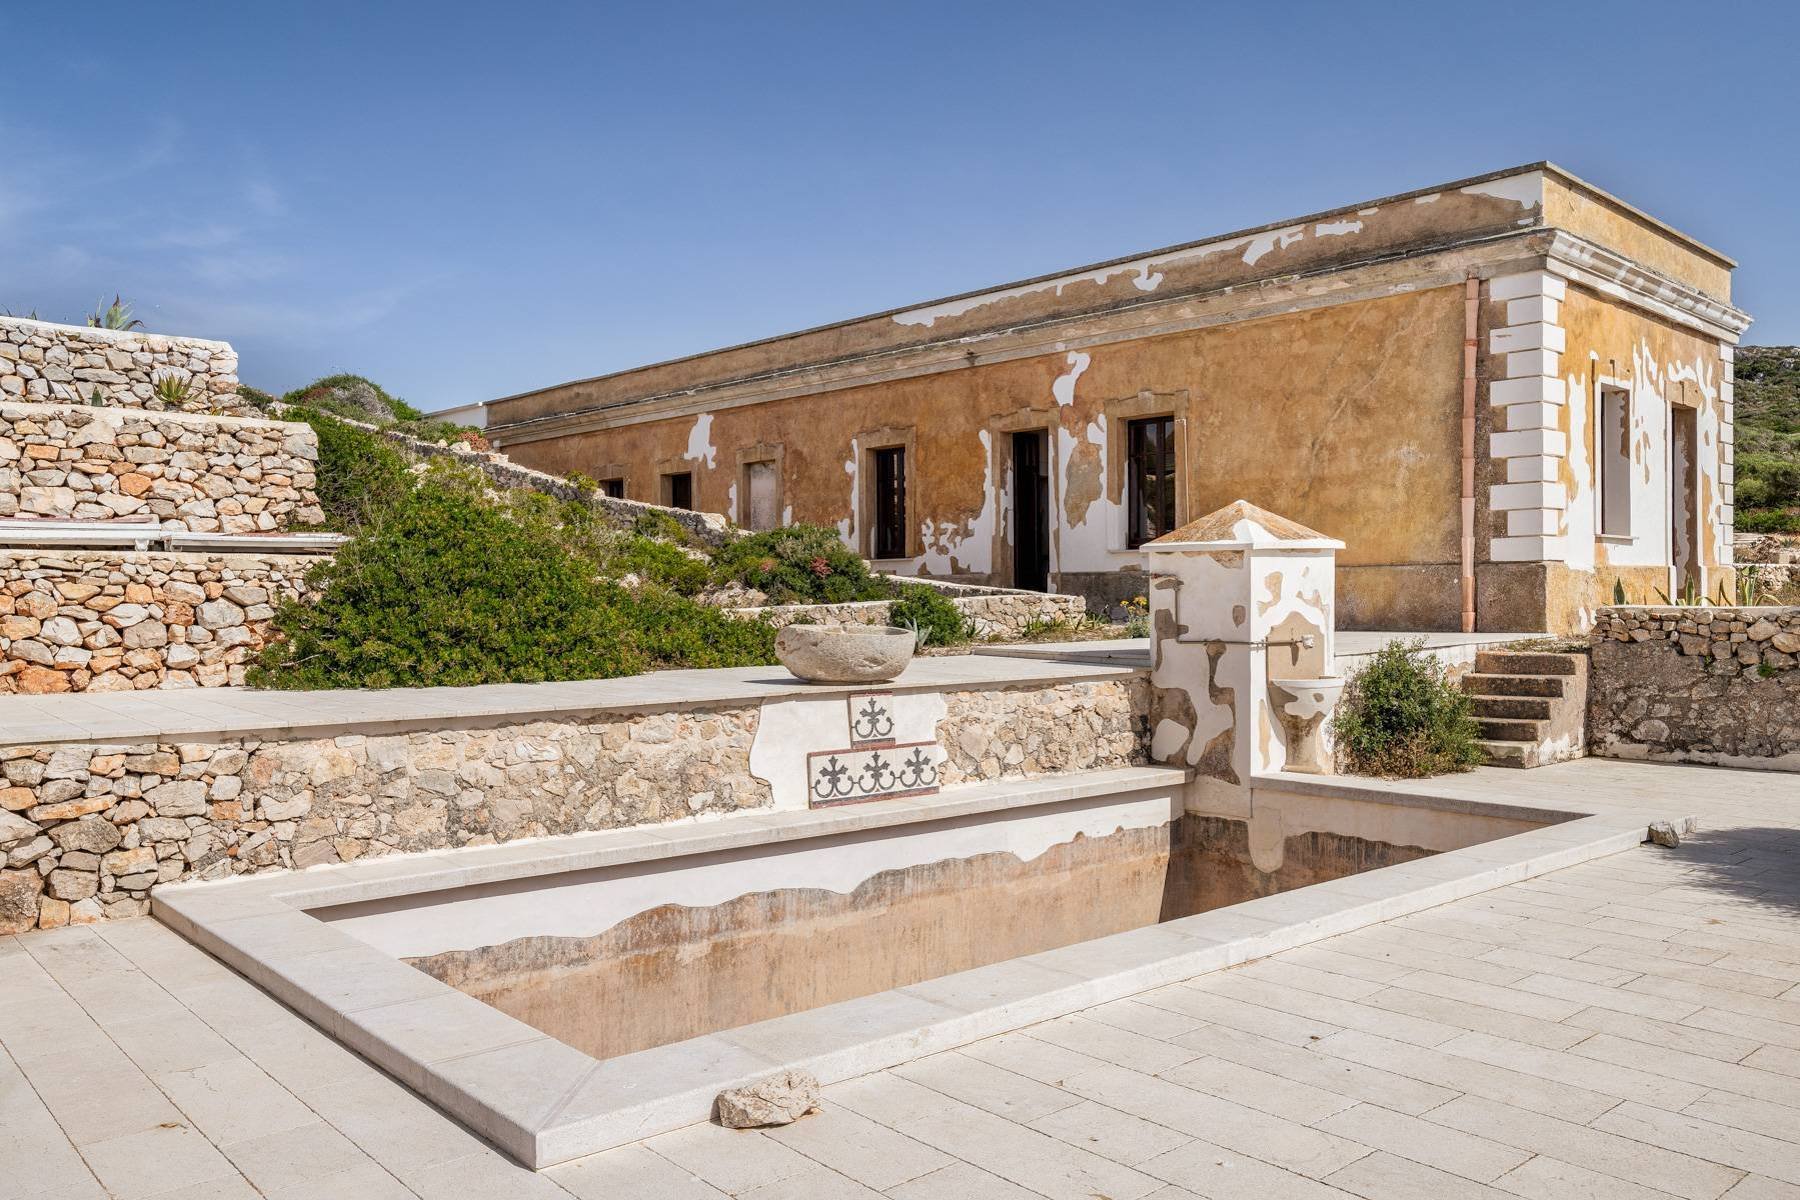 Francis York One-of-a-Kind Italian Estate in the Egadi Islands, Sicily Italy Sothebys 00019.jpg